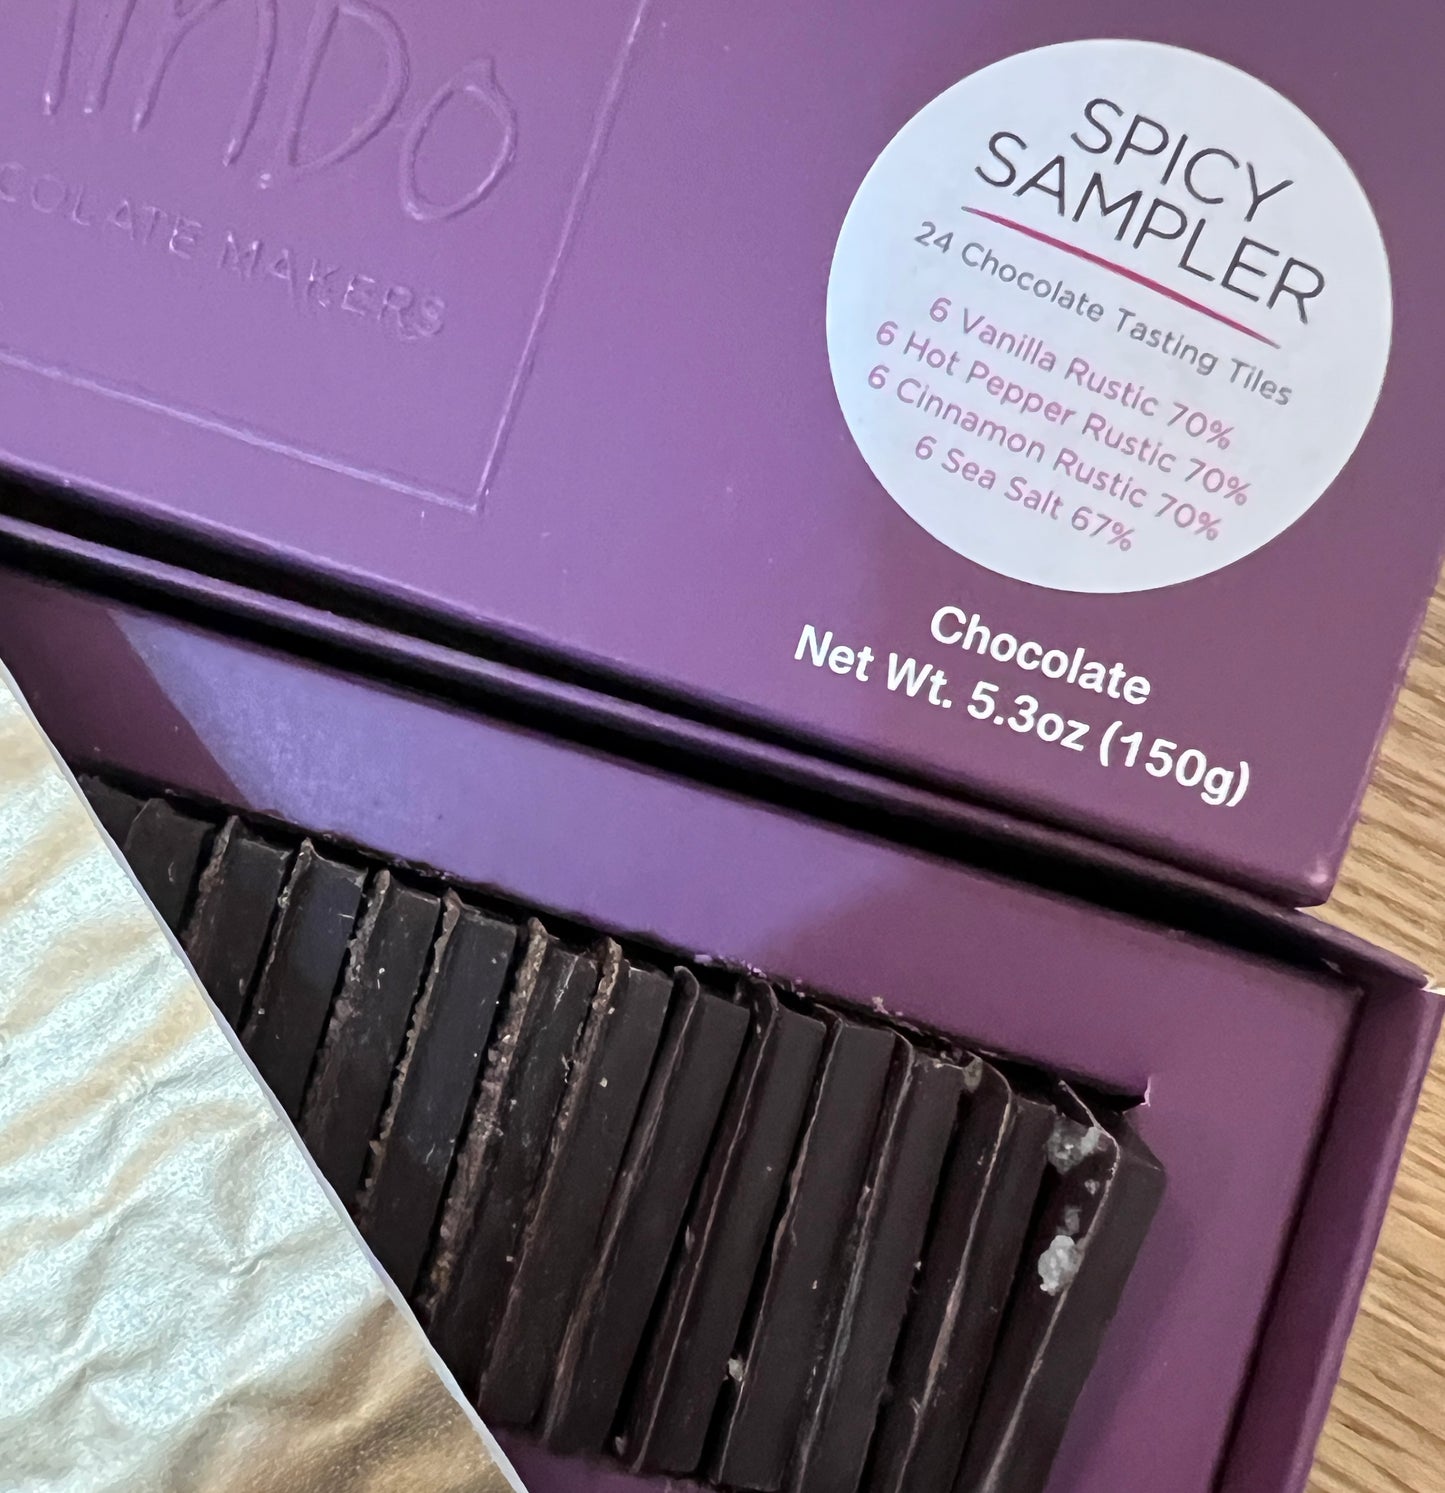 Chocolate tasting kit or Sampler 